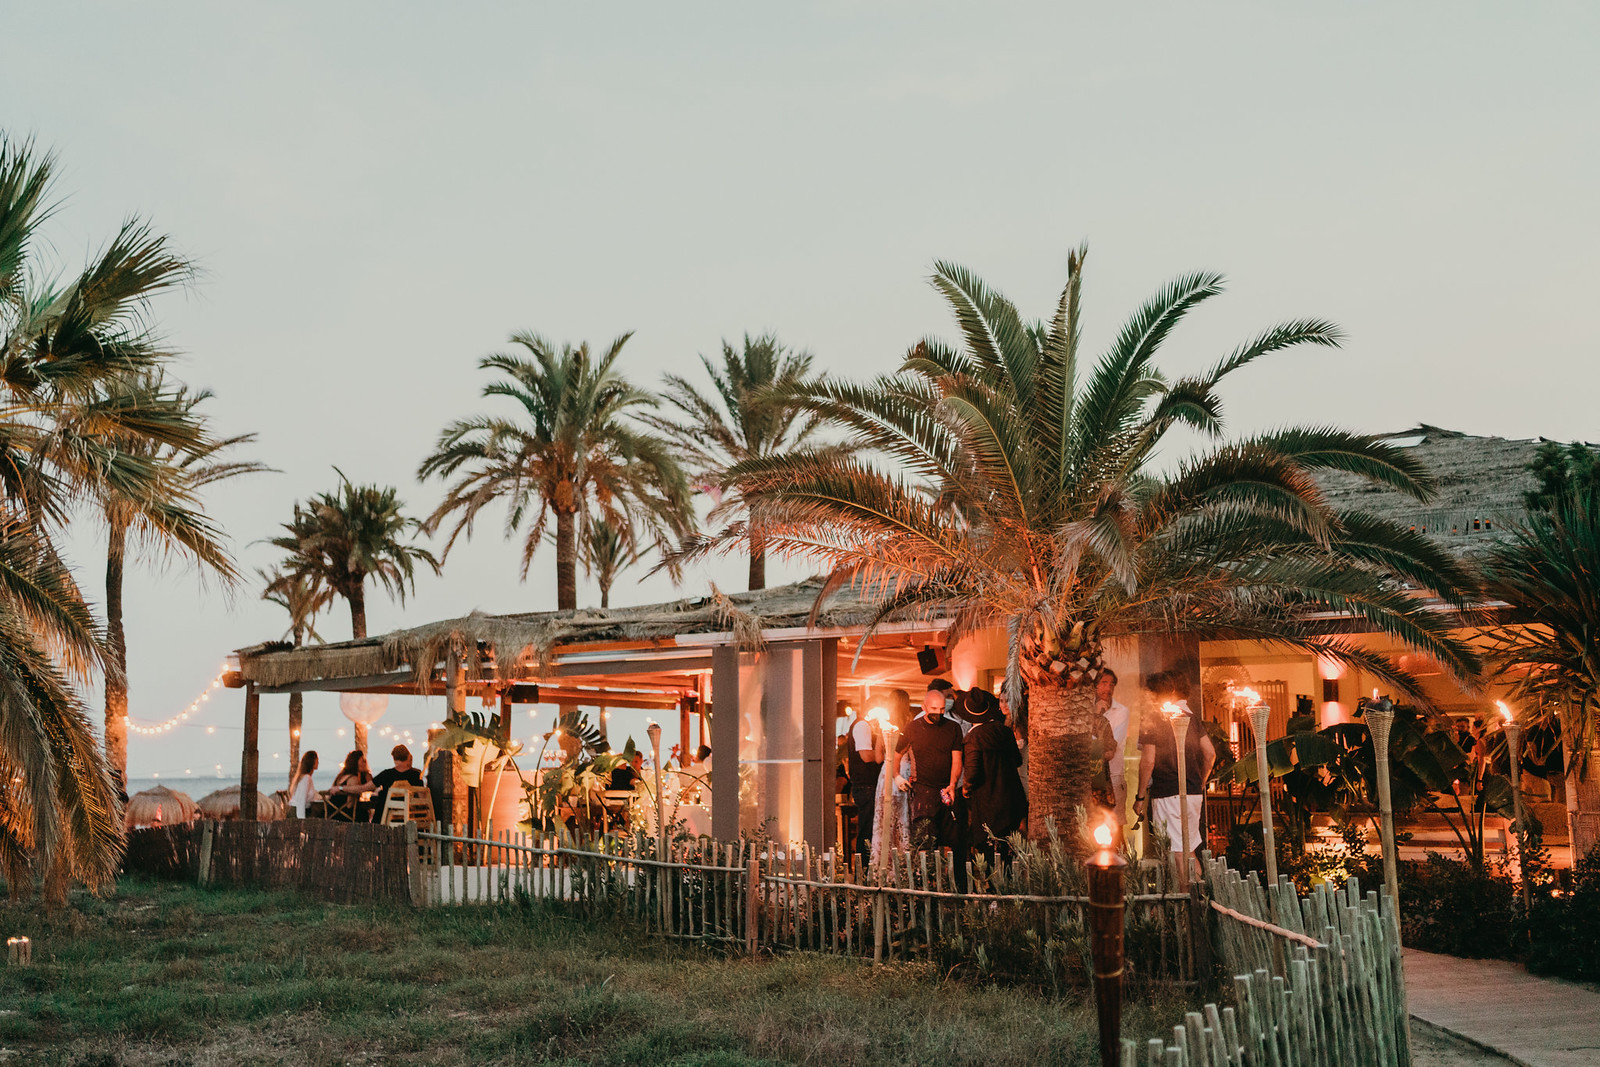 The tribe comes home – Beachouse Ibiza